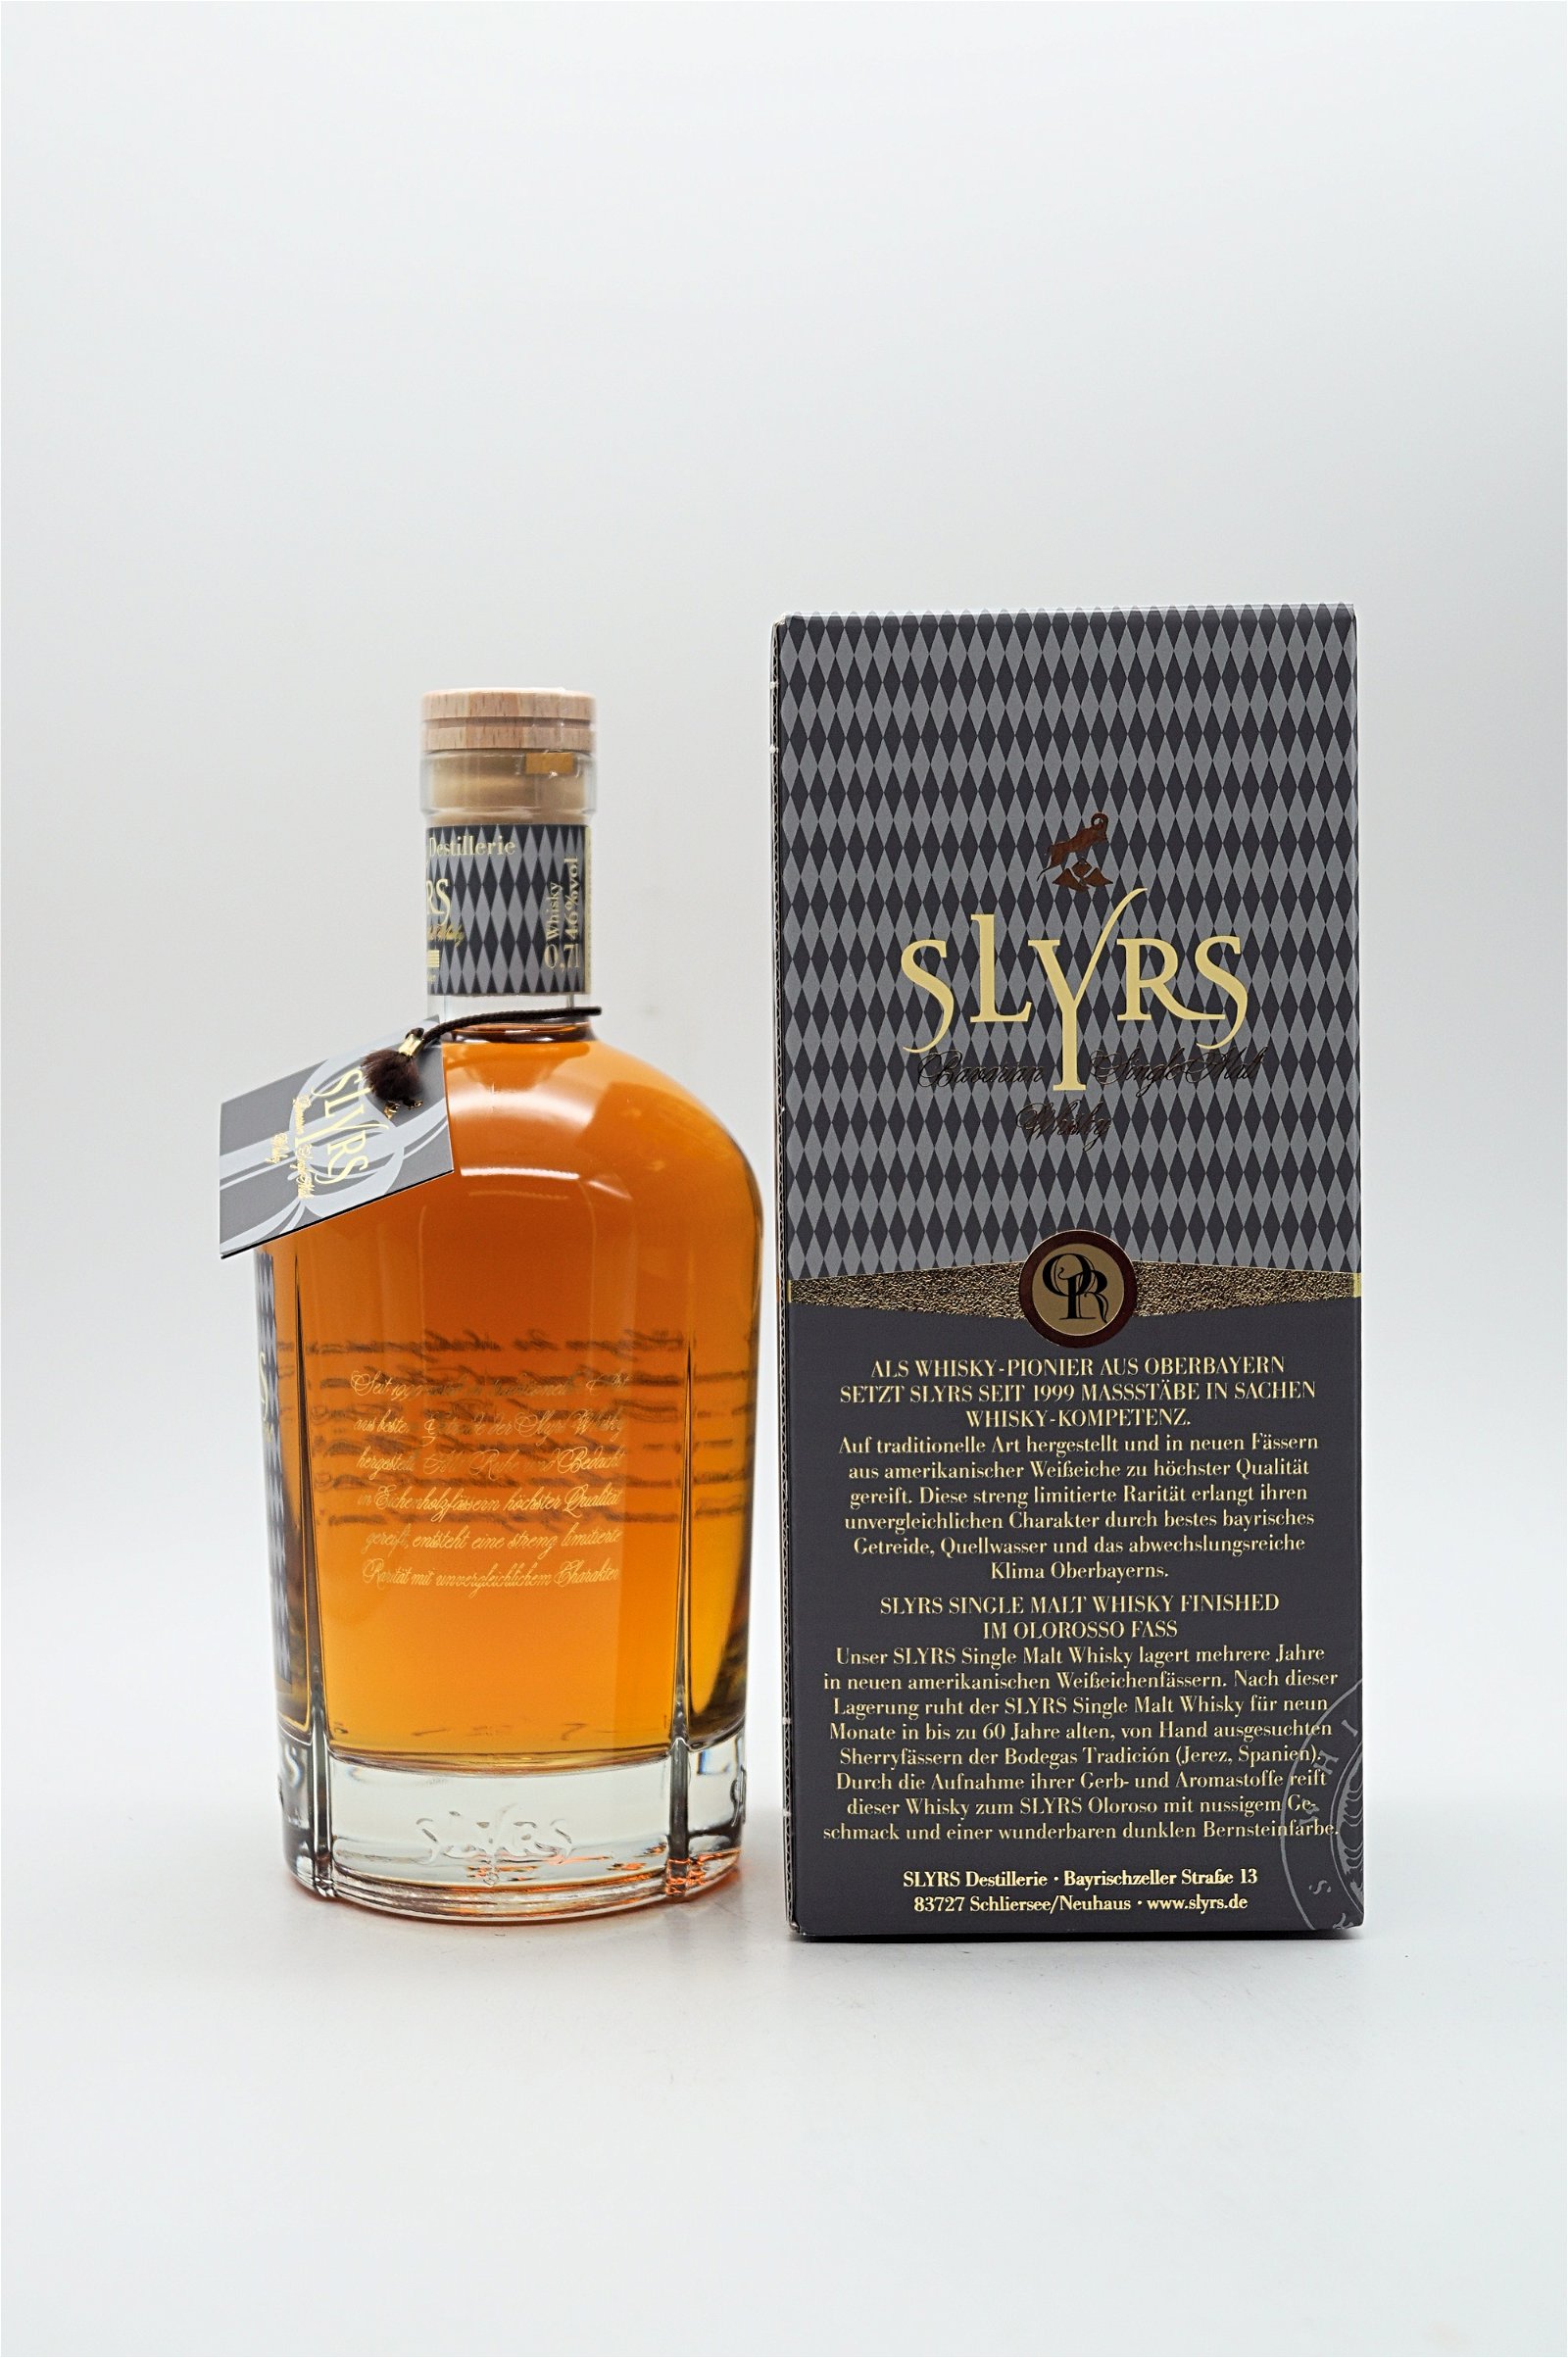 Slyrs Single Malt Whisky Oloroso Cask Finishing